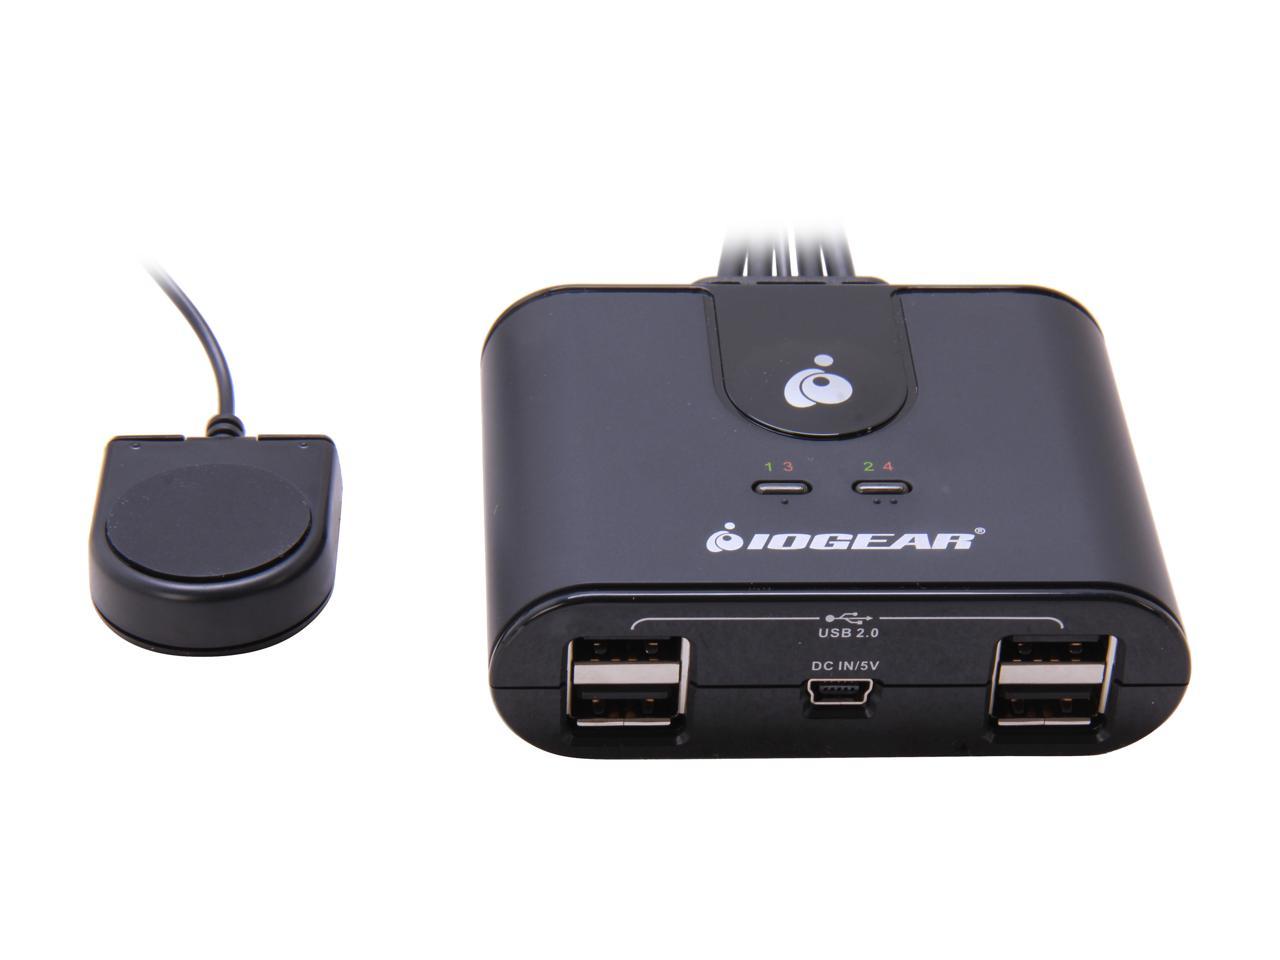 IOGEAR GUS404 4x4 USB 2.0 Peripheral Sharing Switch